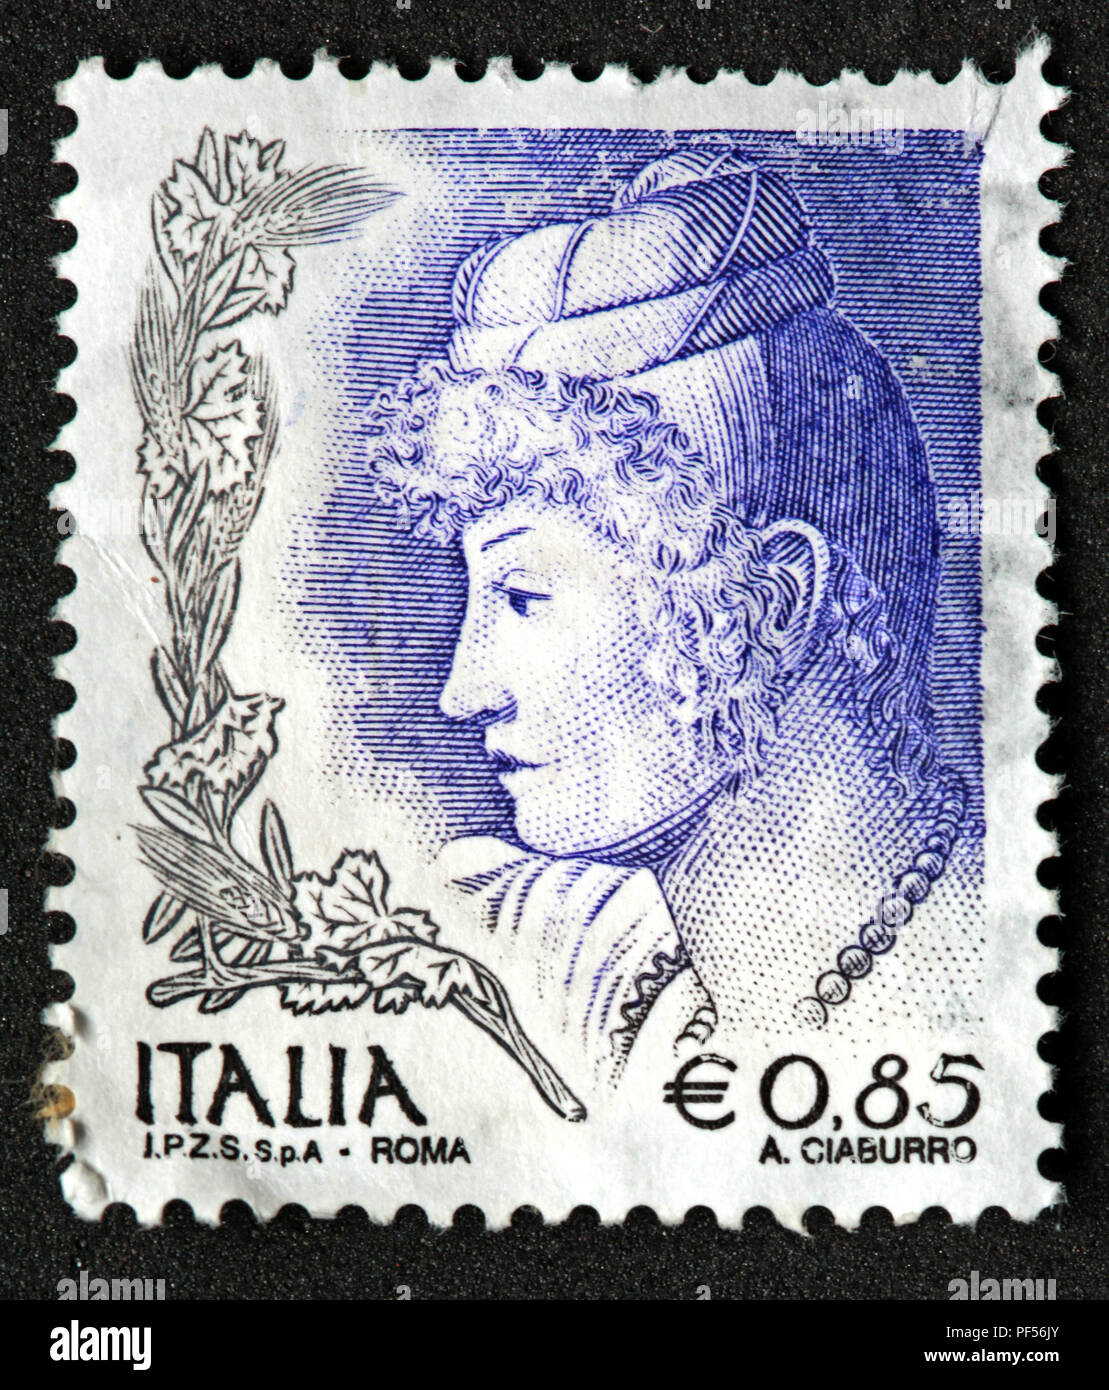 Bleu utilisé Italia Spa IPZS stamp - Roma - 0,85 euro - UN Ciaburro Banque D'Images